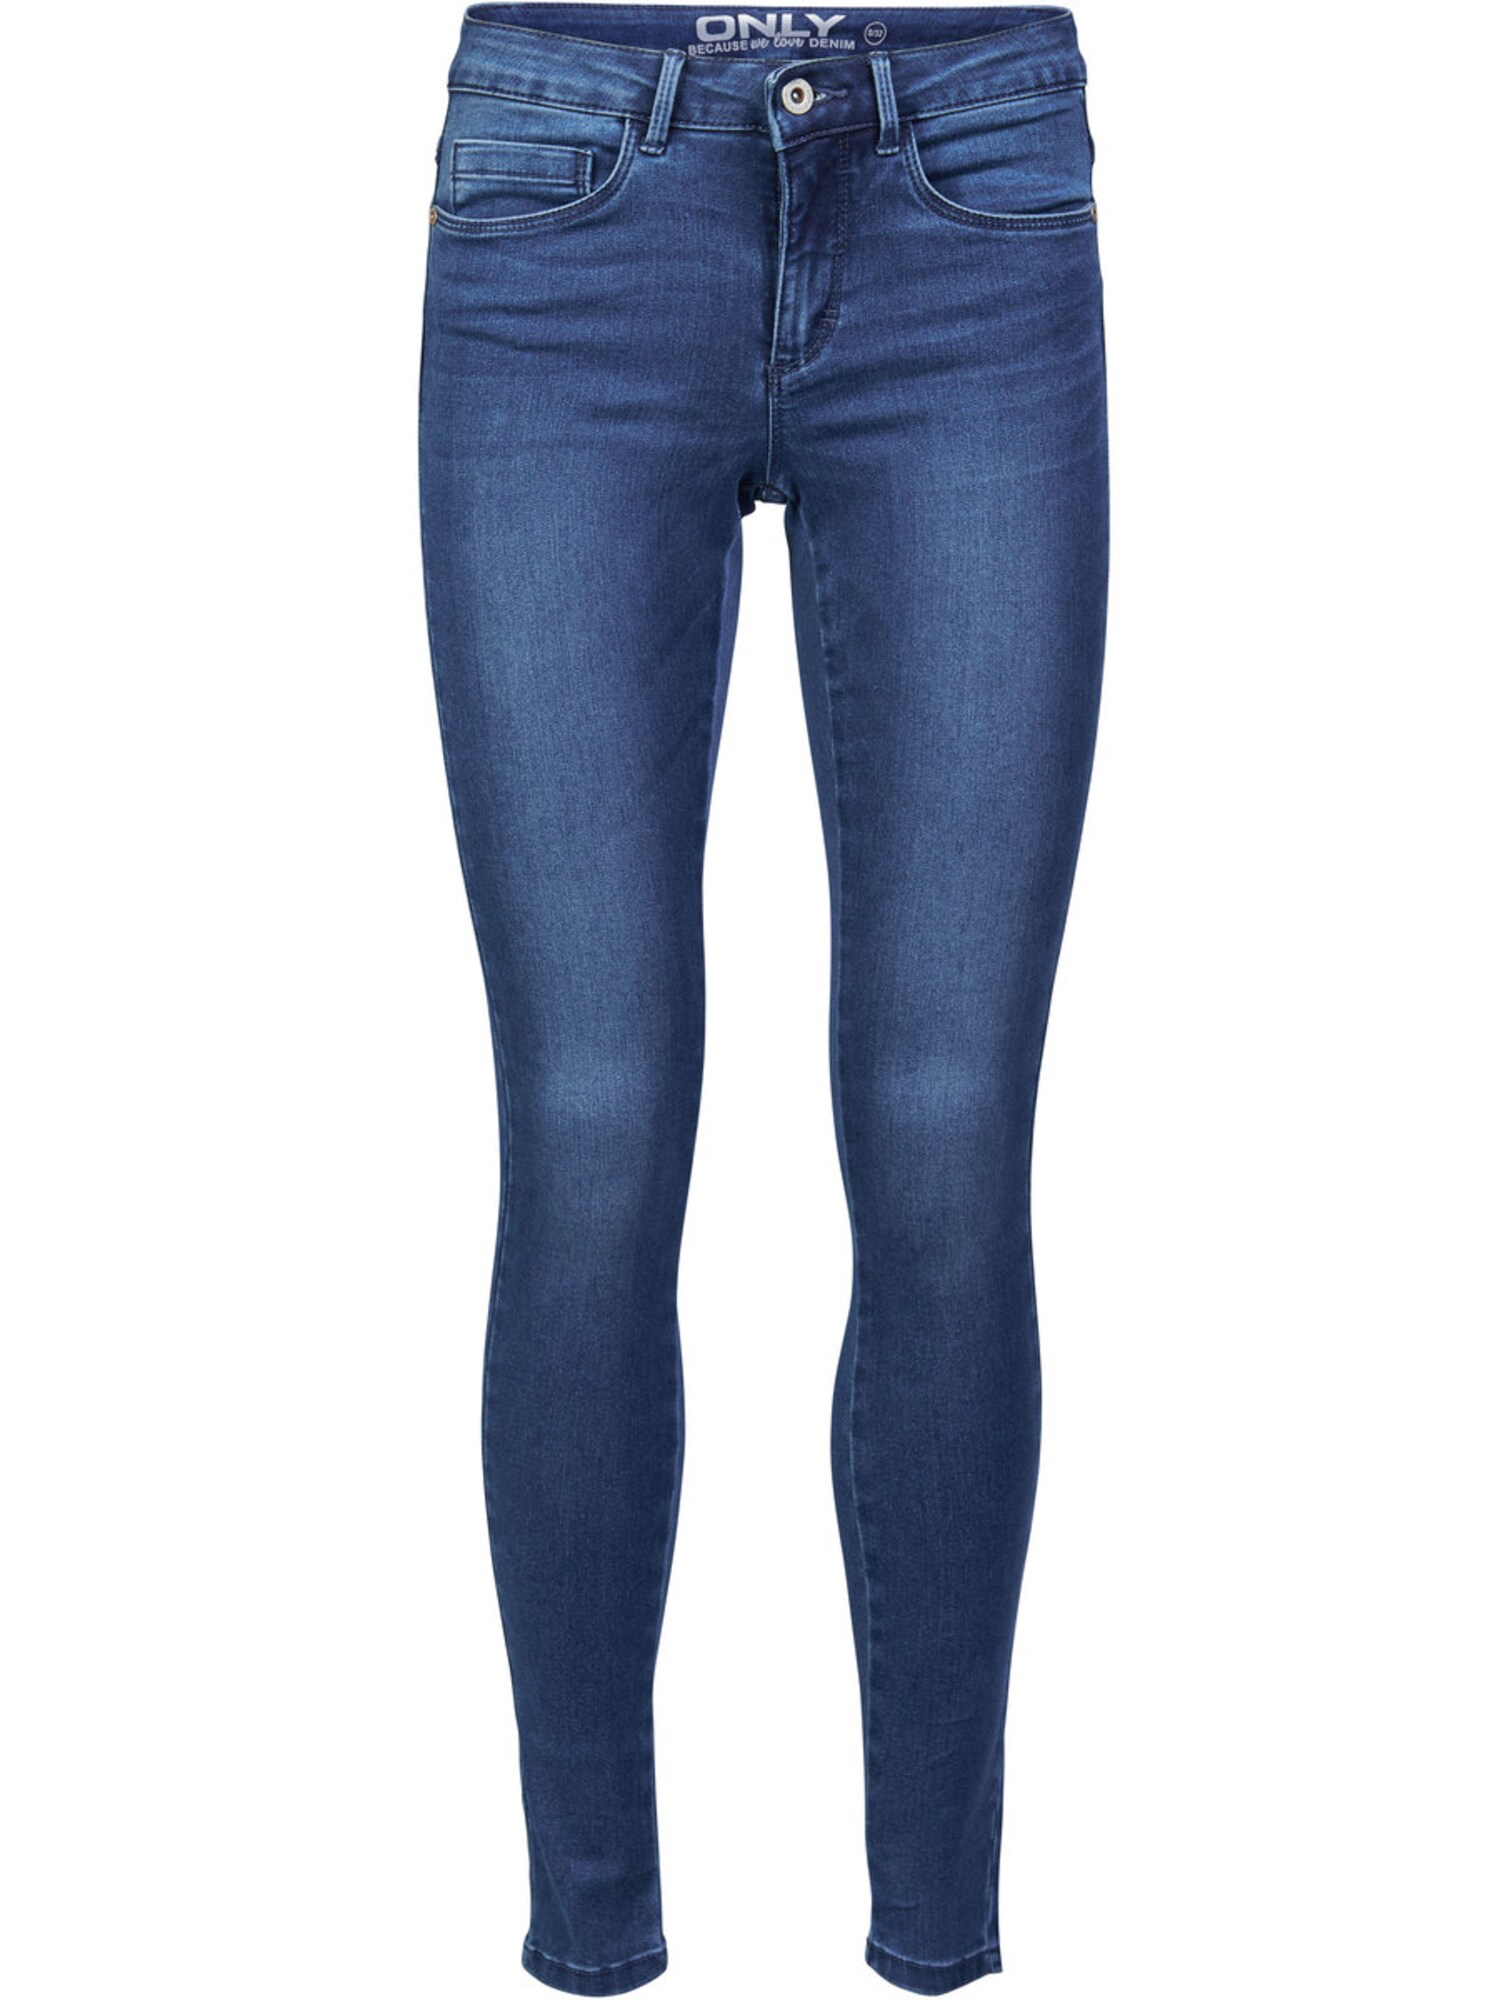 5712411617597 EAN - Only Damen Jeanshose Royal High Skinny Jeans Pim101 ...